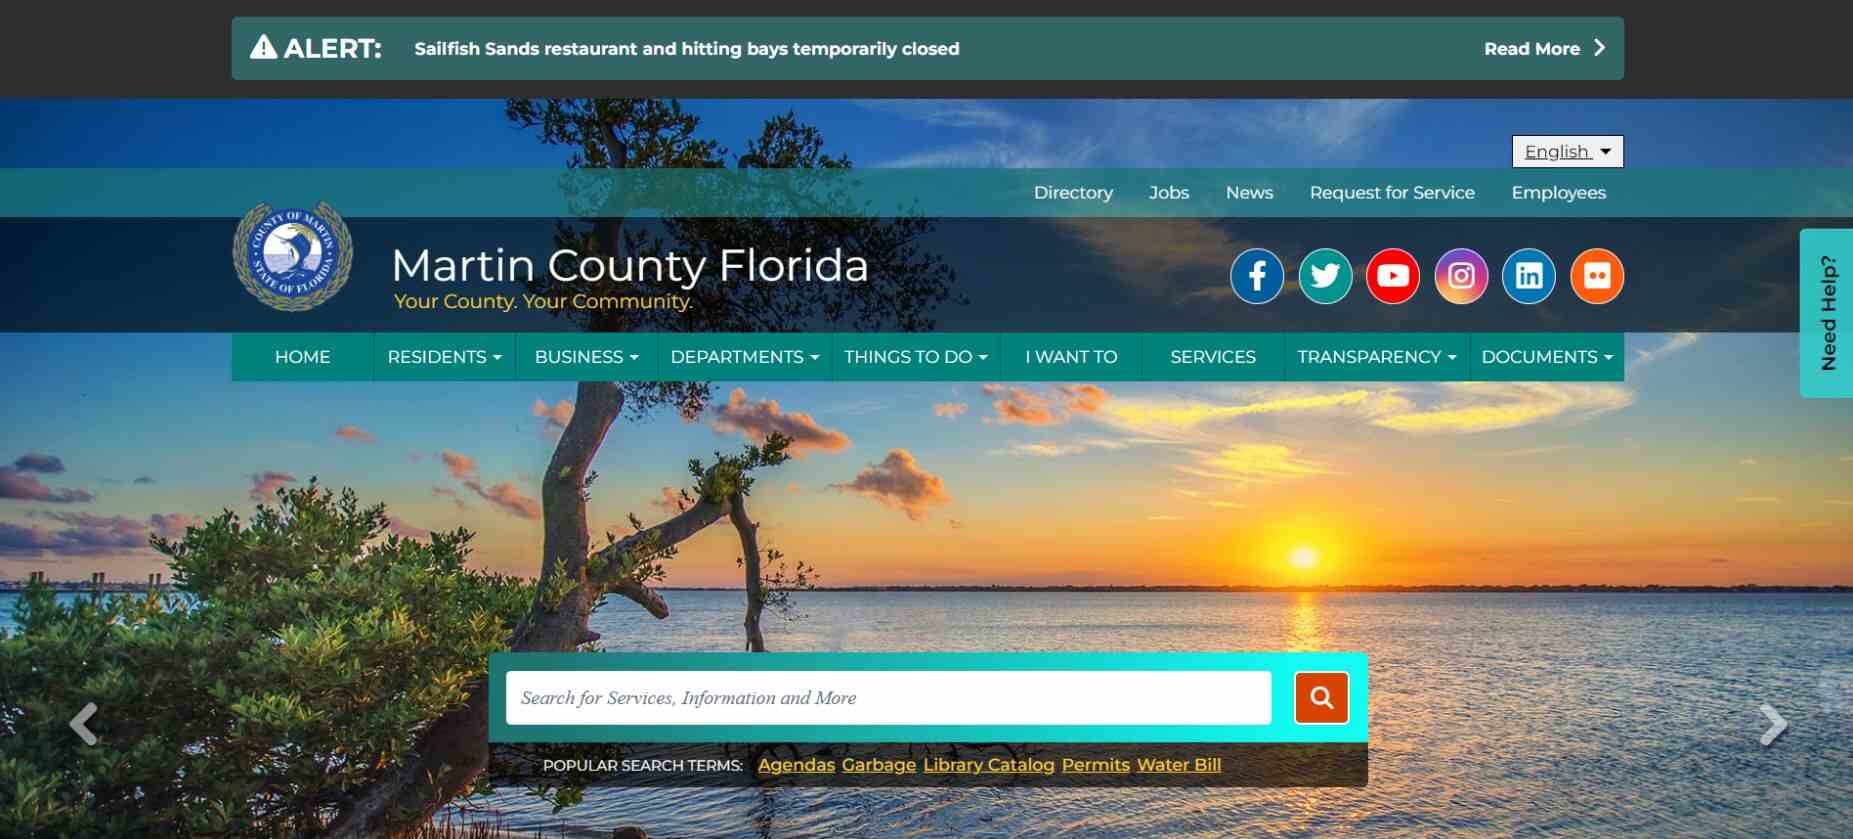 Martin County website header